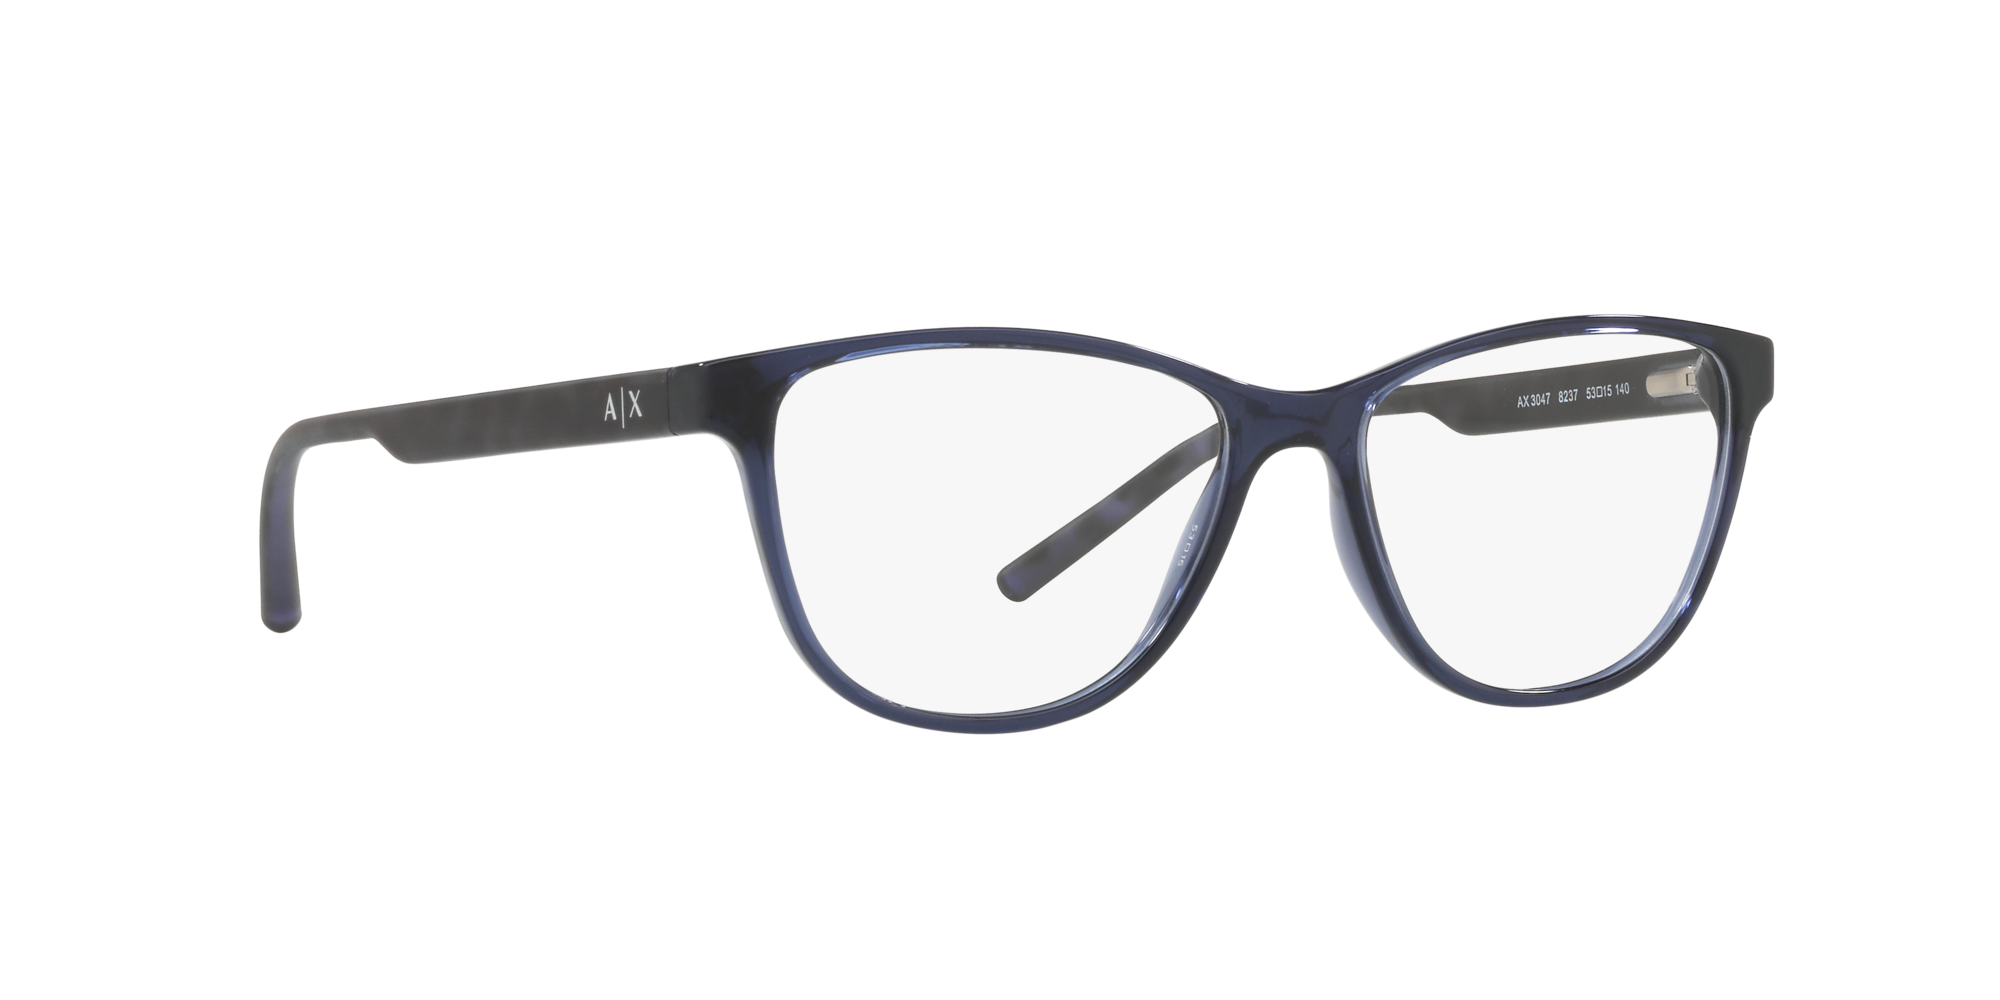 Angle_Right01 Armani Exchange AX 8237 (8237) Glasses Transparent / Transparent